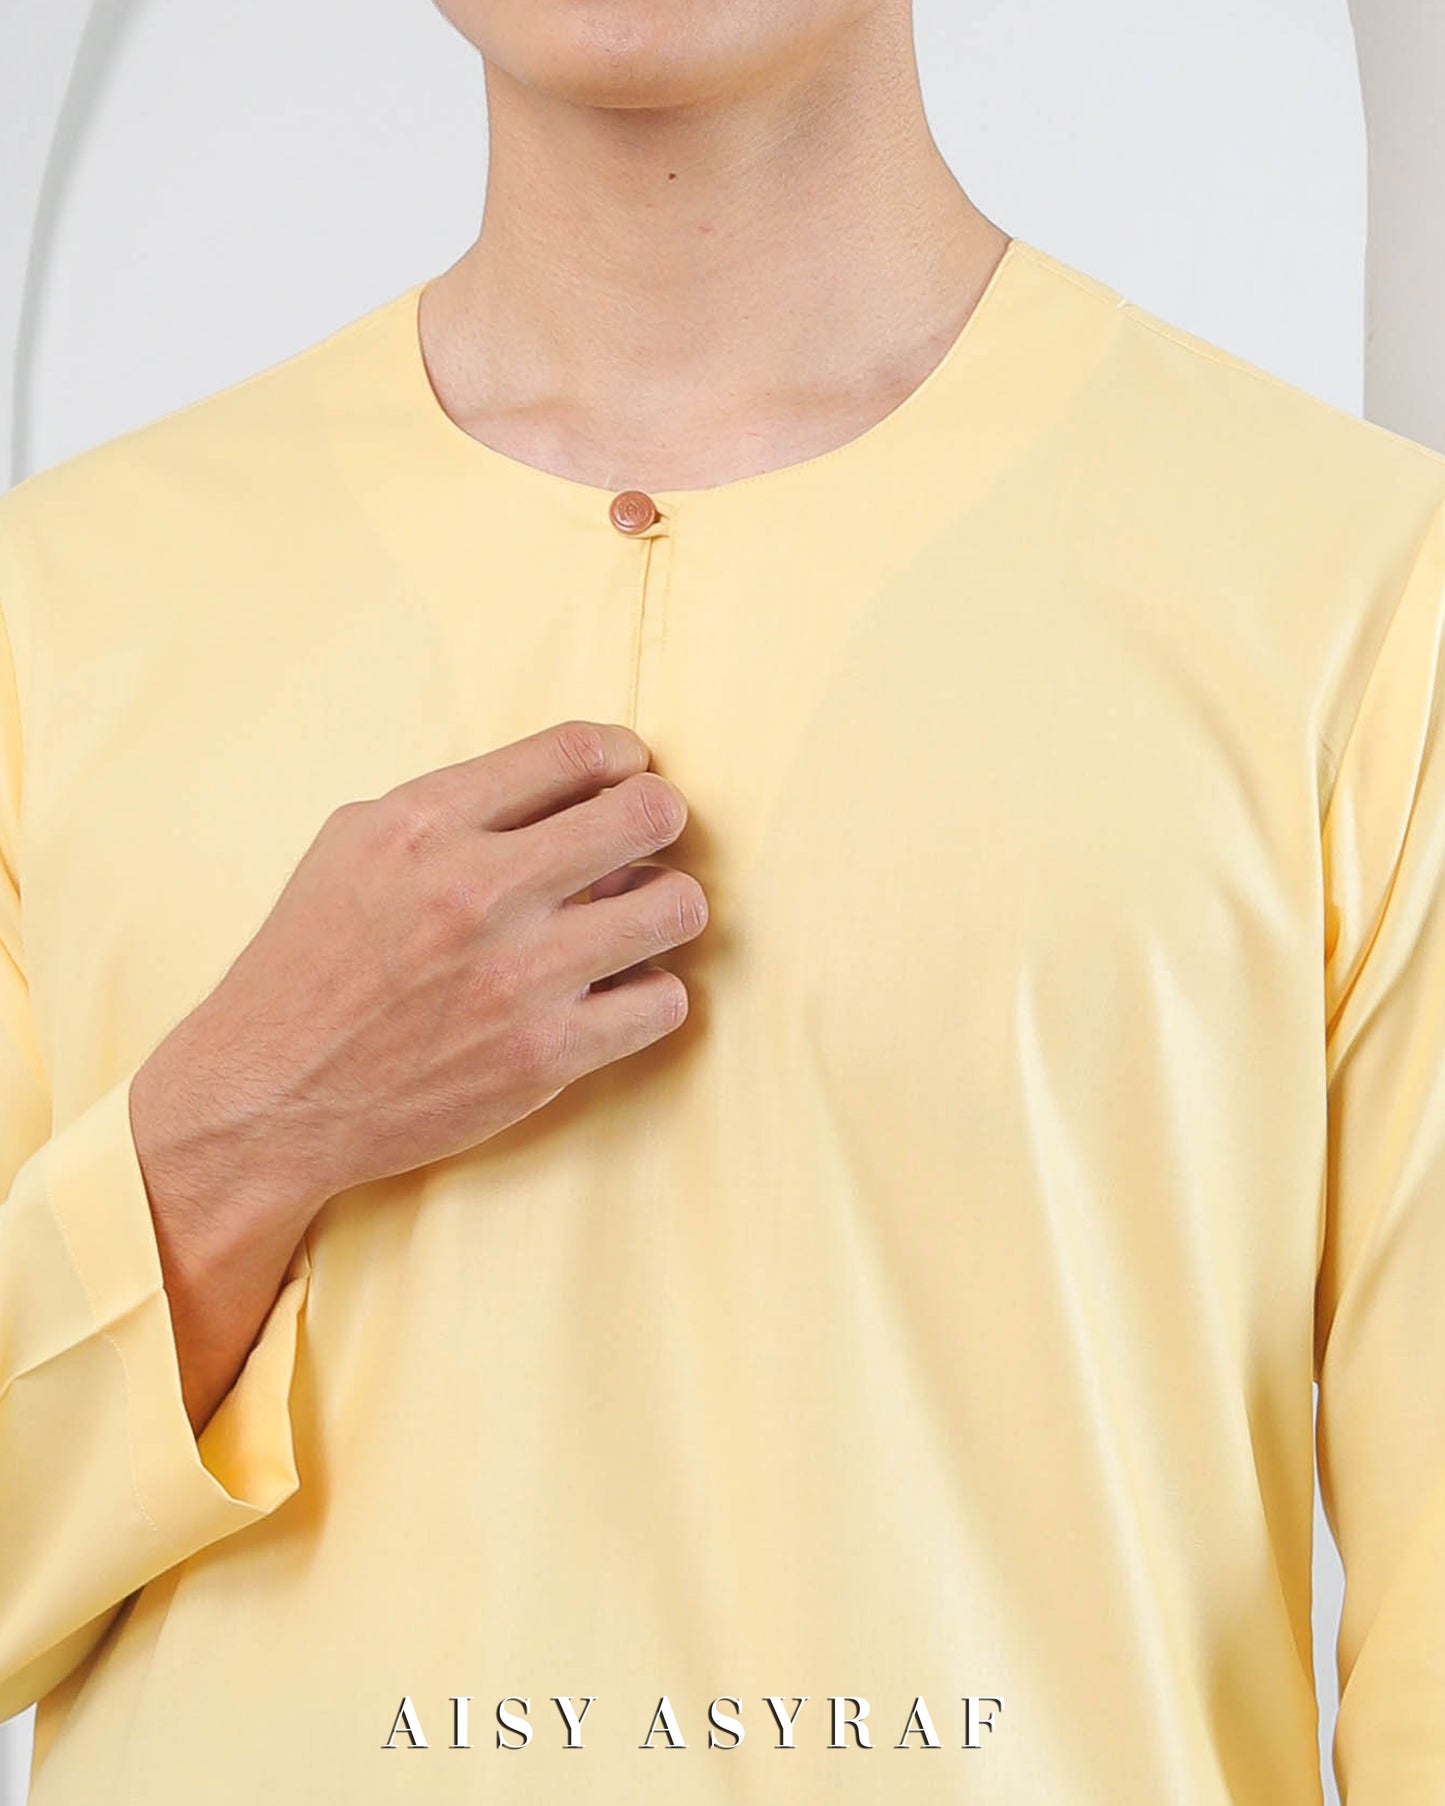 Baju Melayu Reyza - Light Yellow